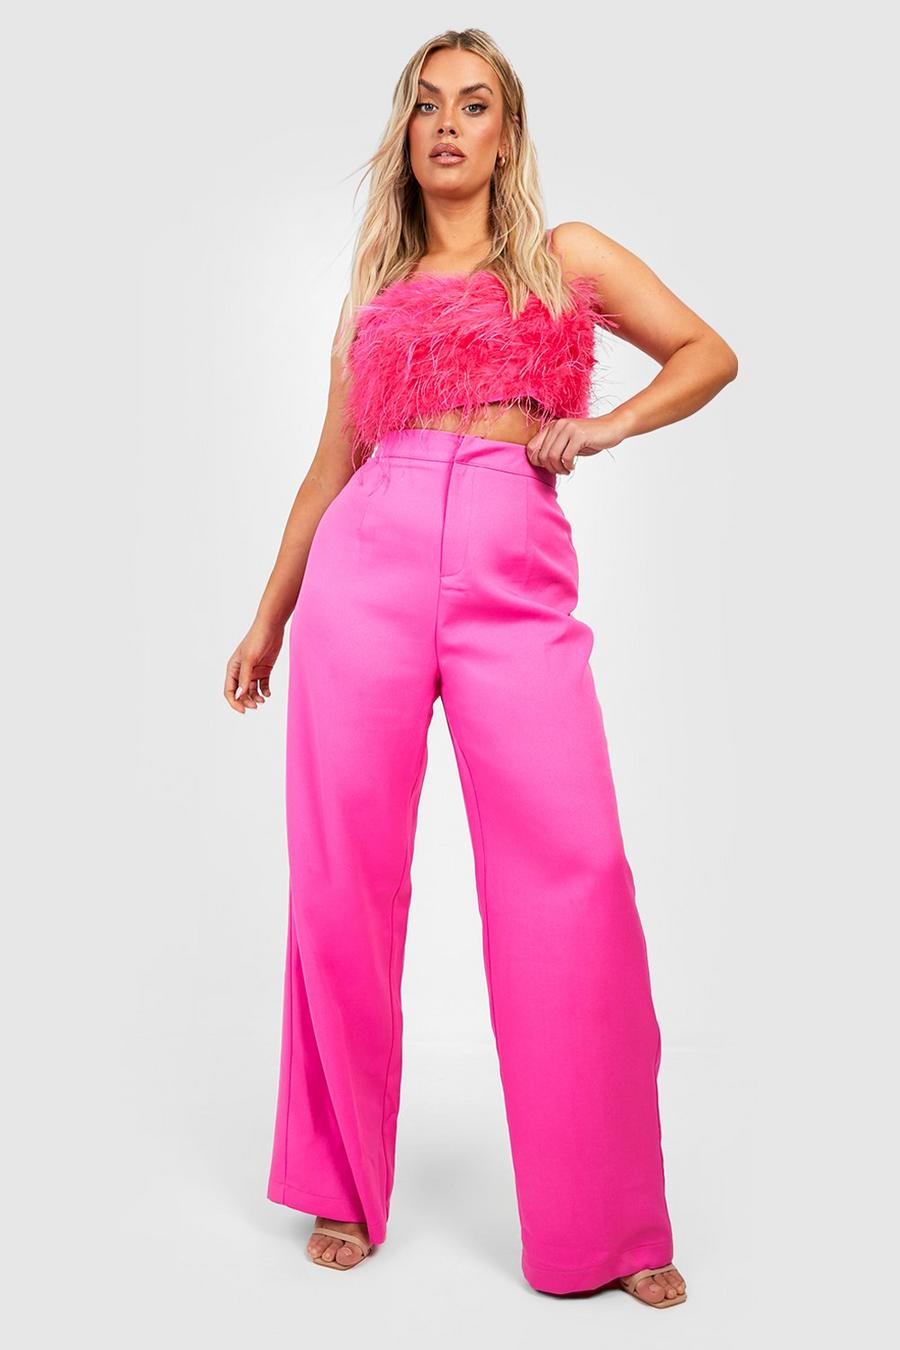 Grande taille - Pantalon de tailleur, Hot pink